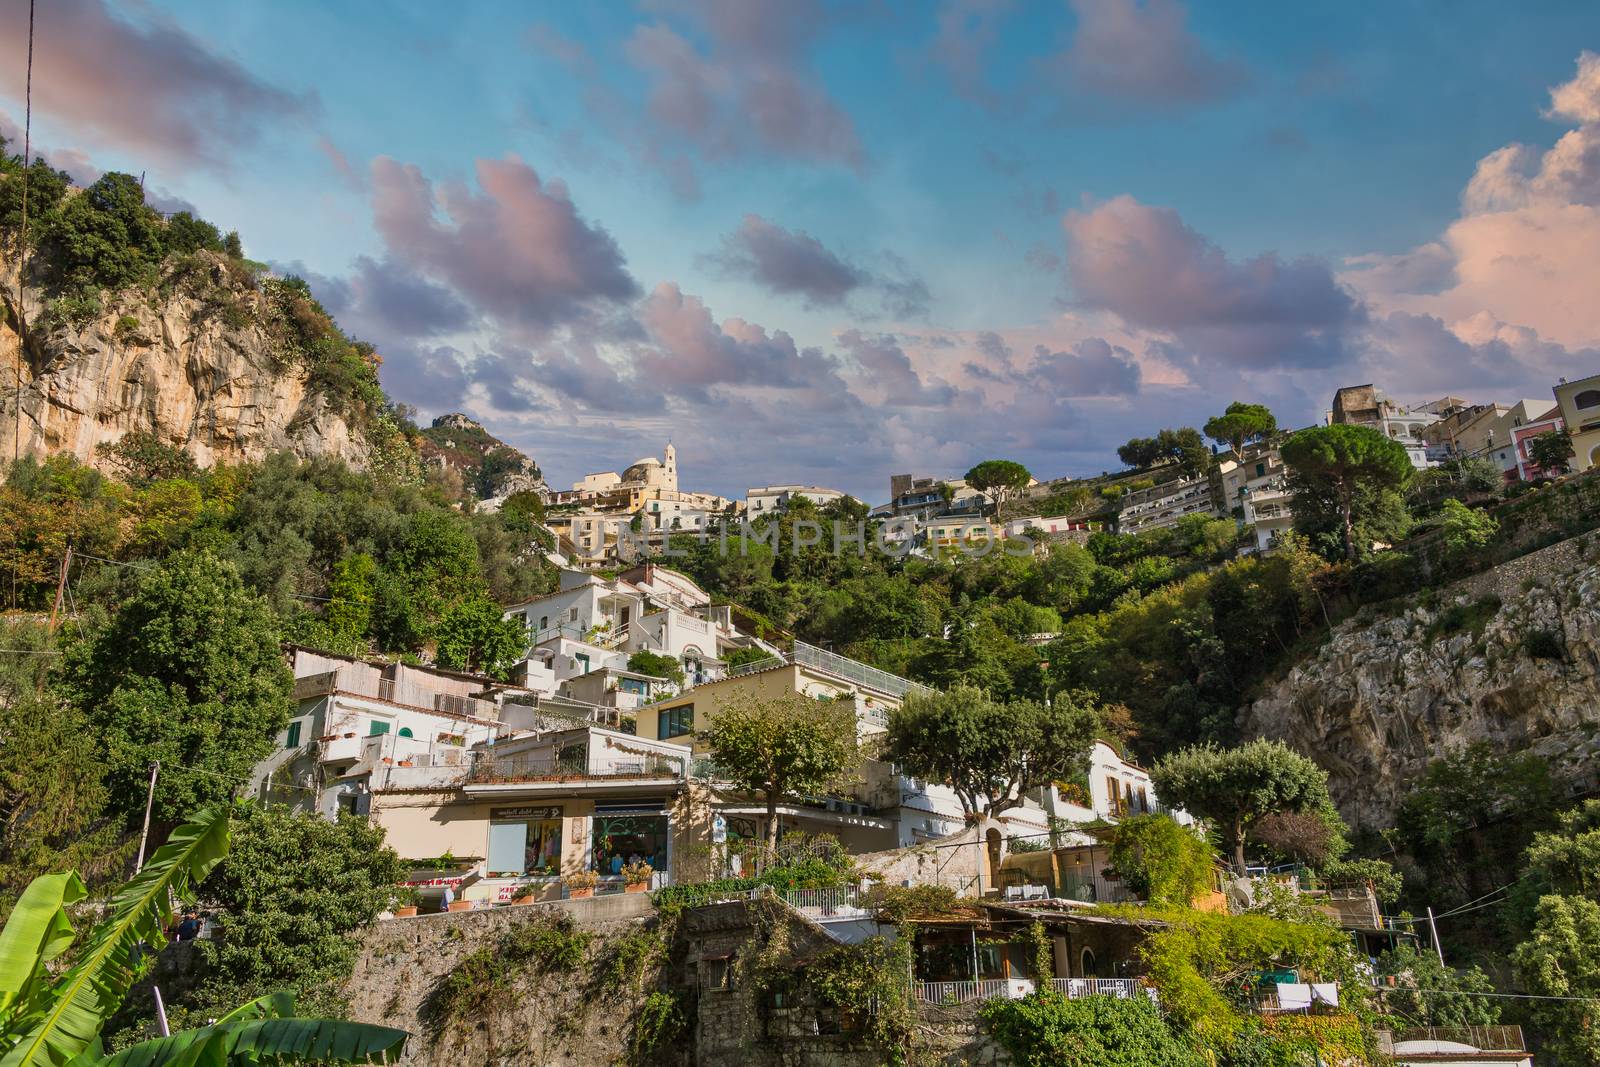 Homes up Hillside in Positano Italy by dbvirago